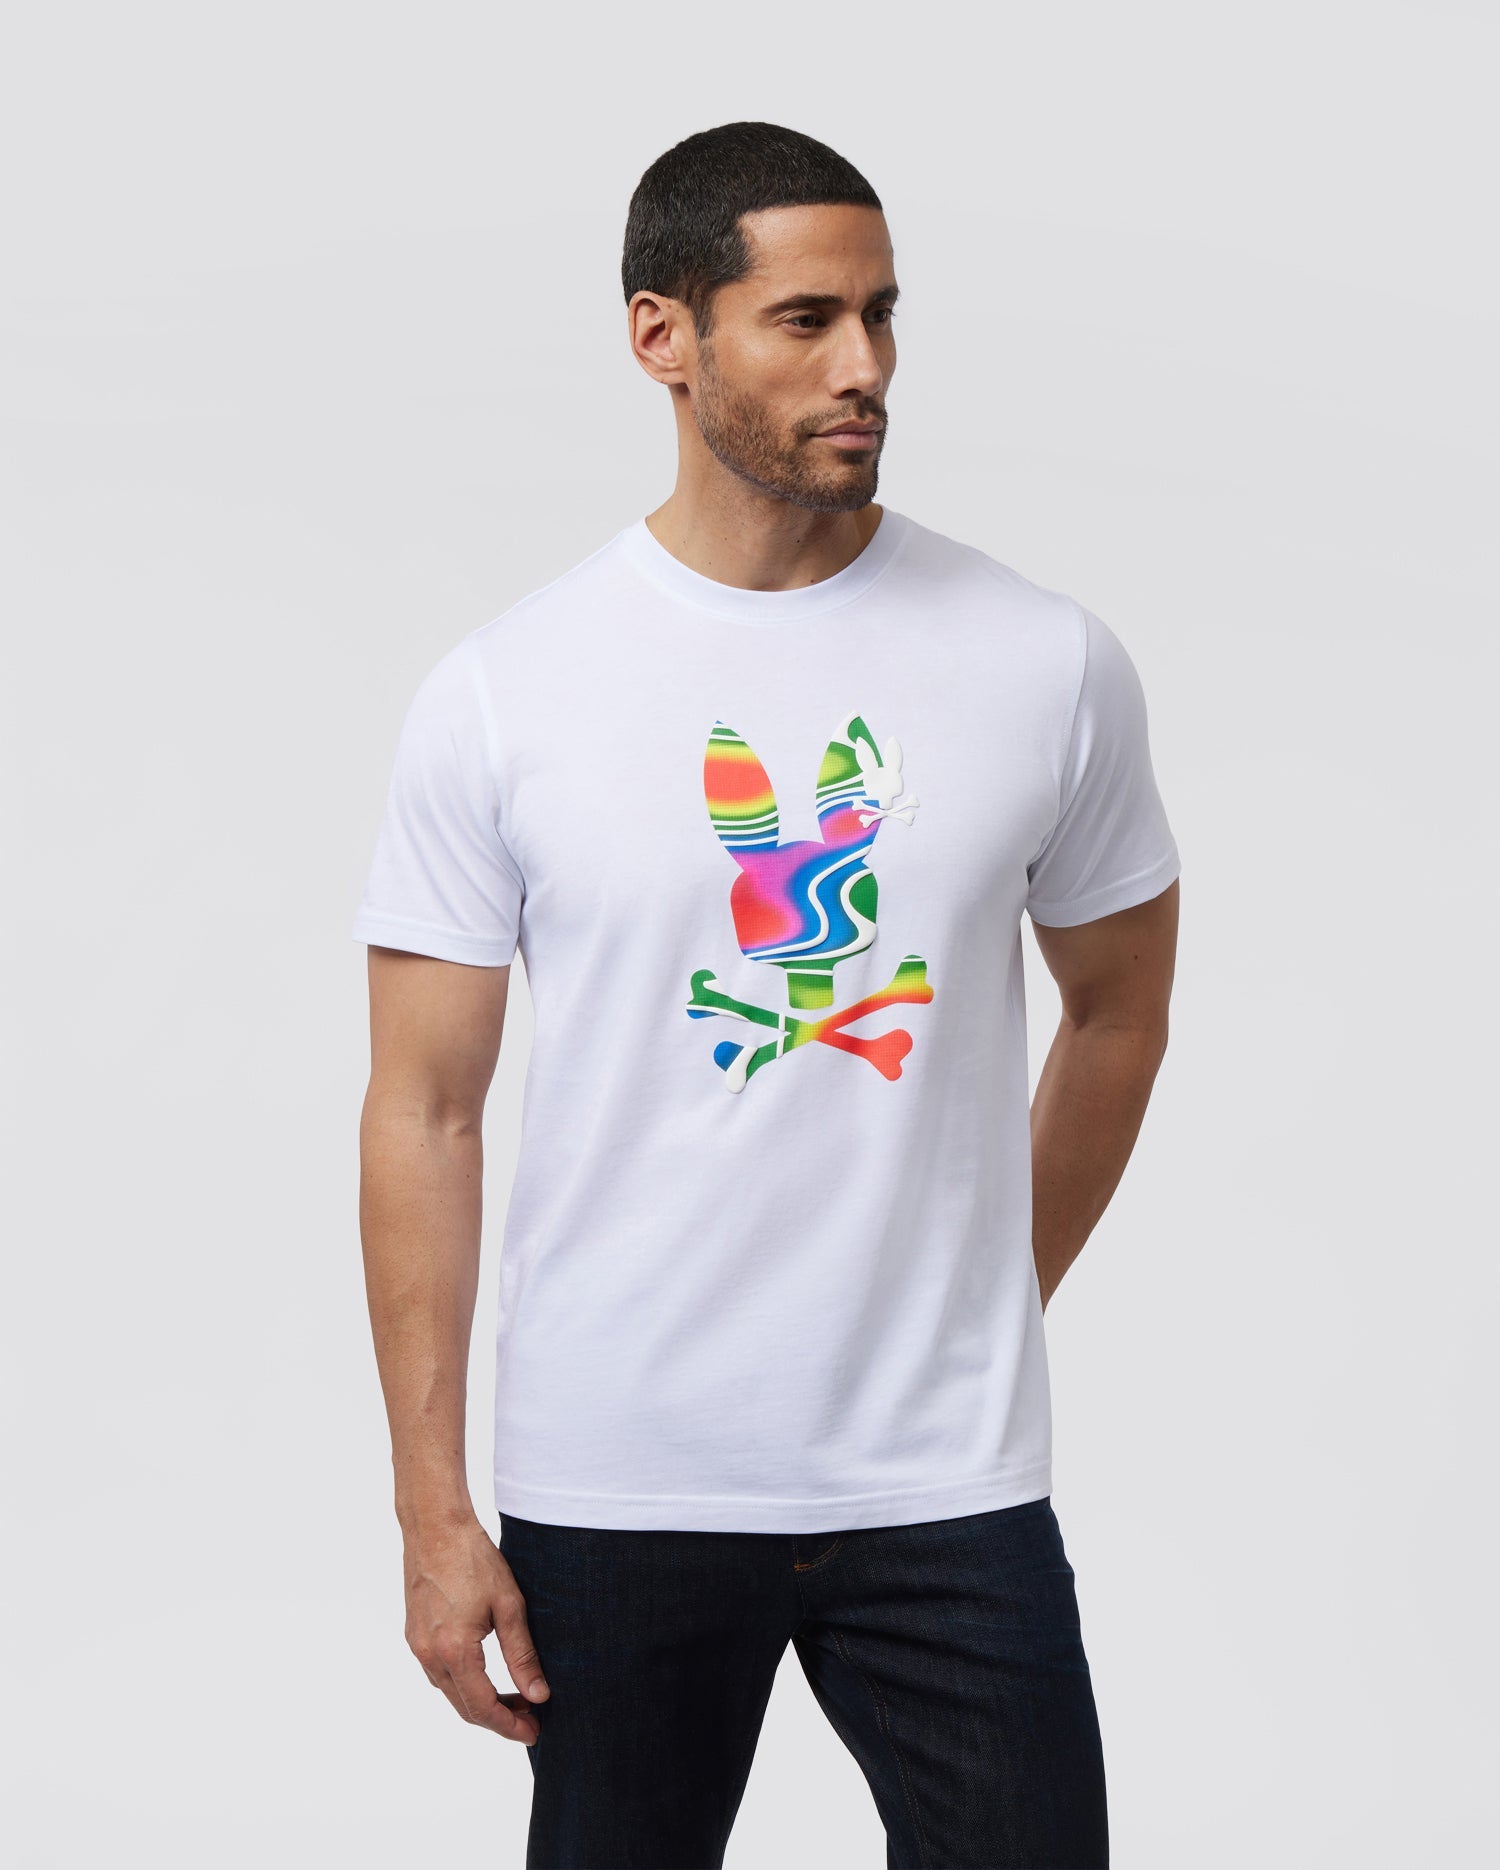 Men's Graphic Tees, Printed T-Shirts